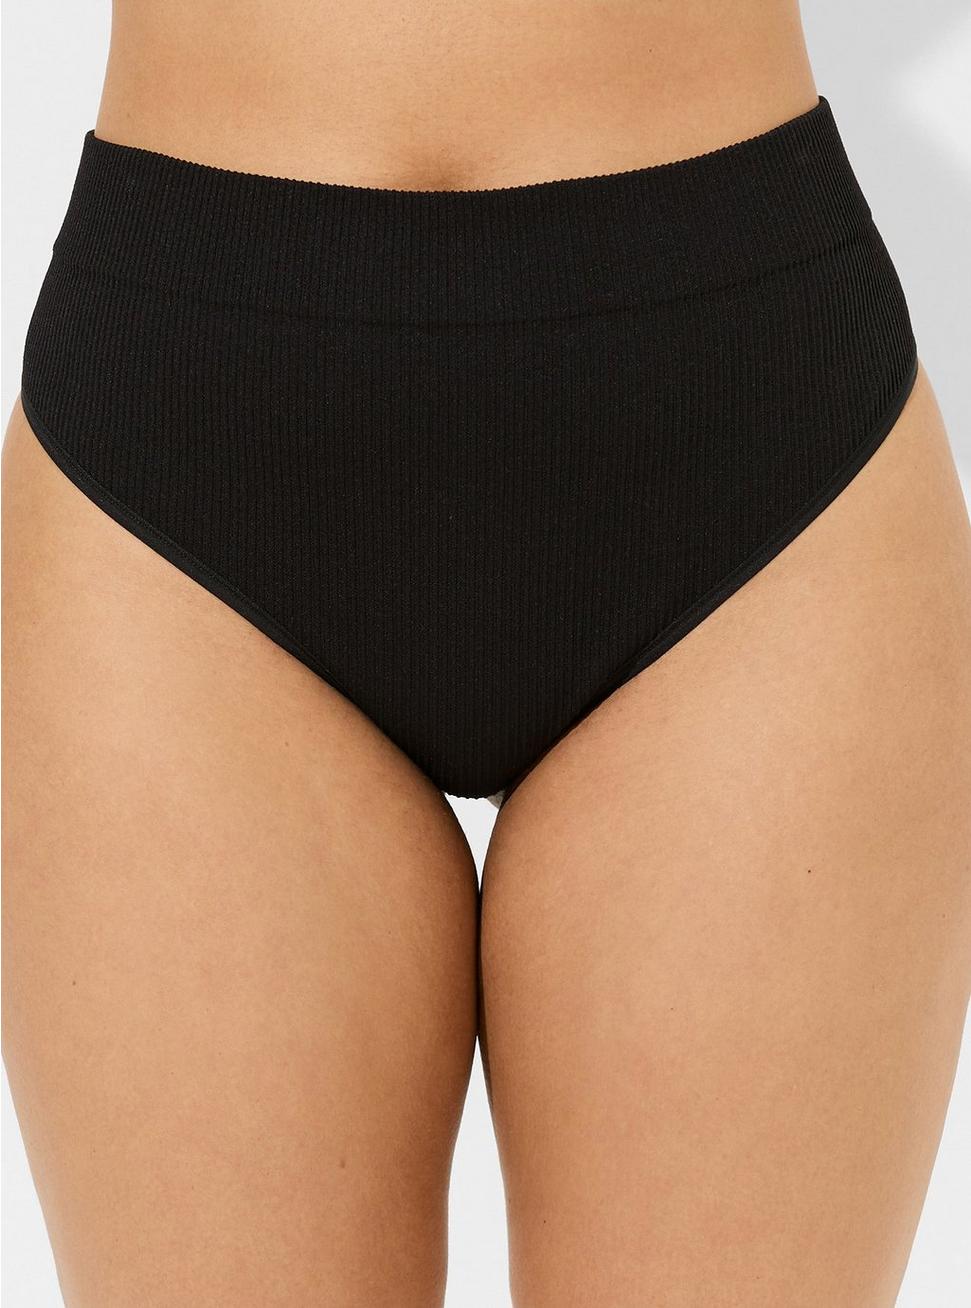 Torrid Black 4-Way Stretch High Waist Lace Thong Panty Plus Size 4X, 26